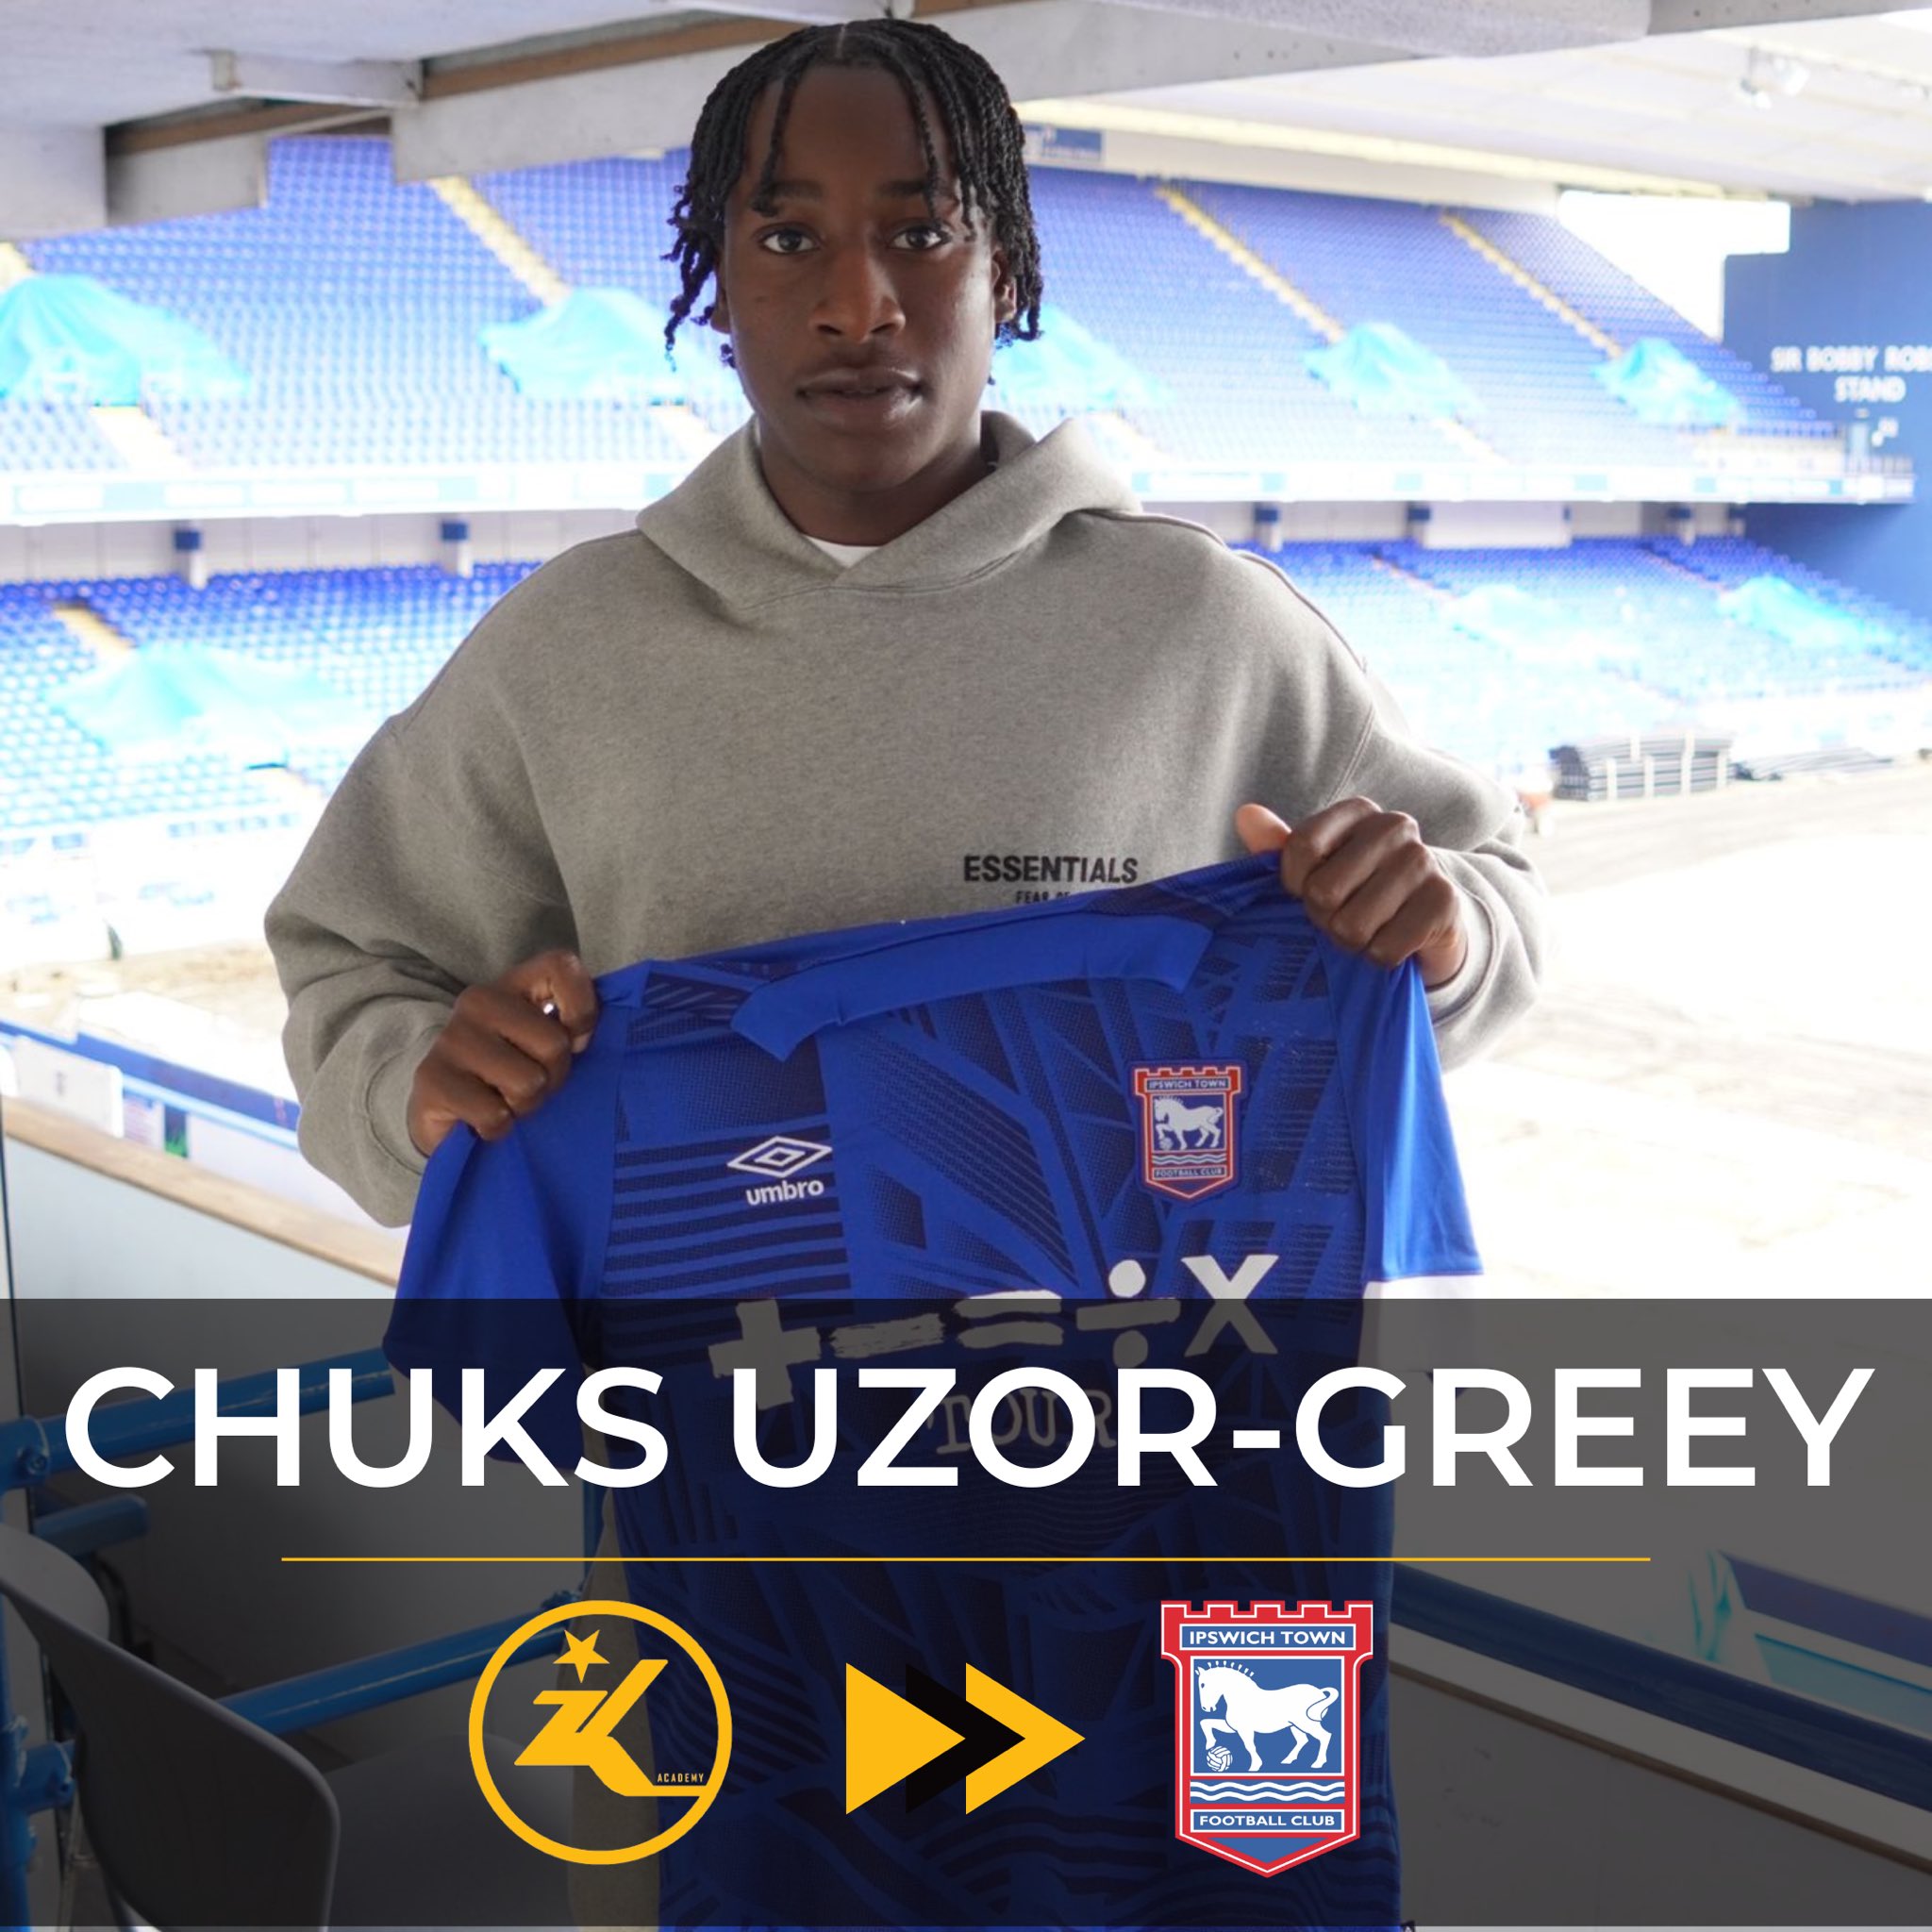 Chuks Uzor-Greey signs for Ipswich Town FC